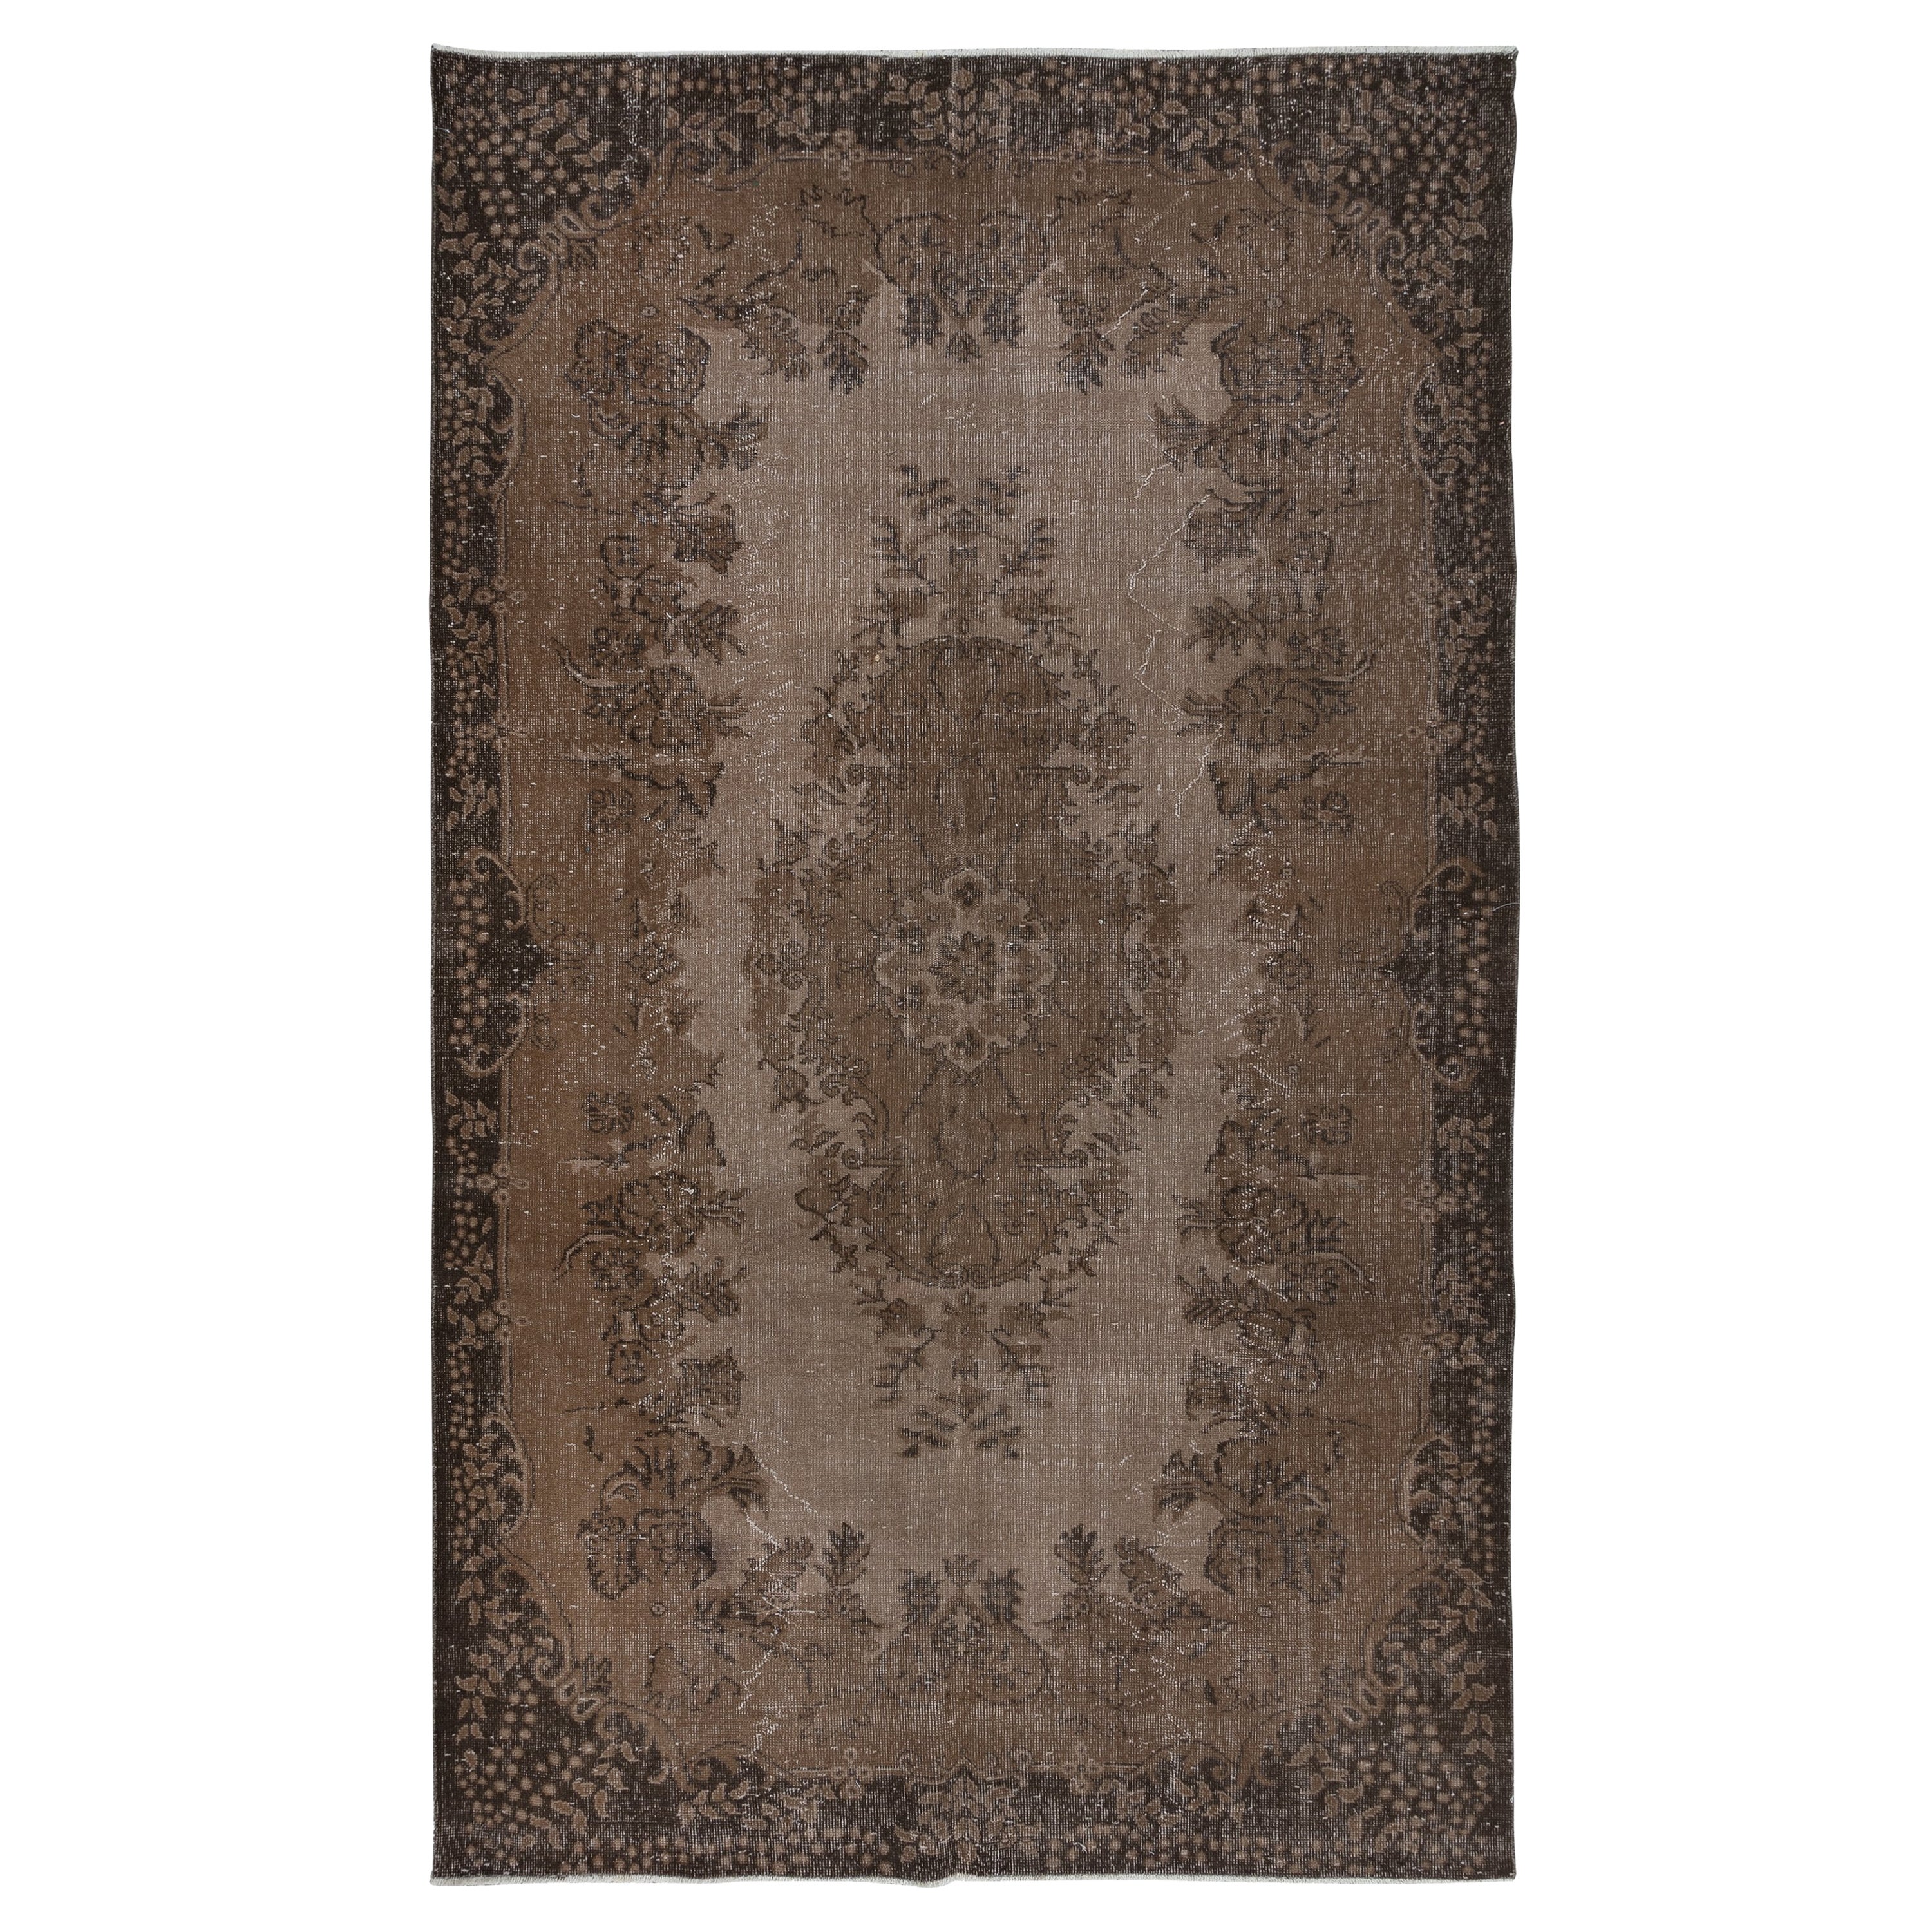 6x9.8 Ft Handmade Turkish Rug, Brown Medallion Design Carpet for Living Room